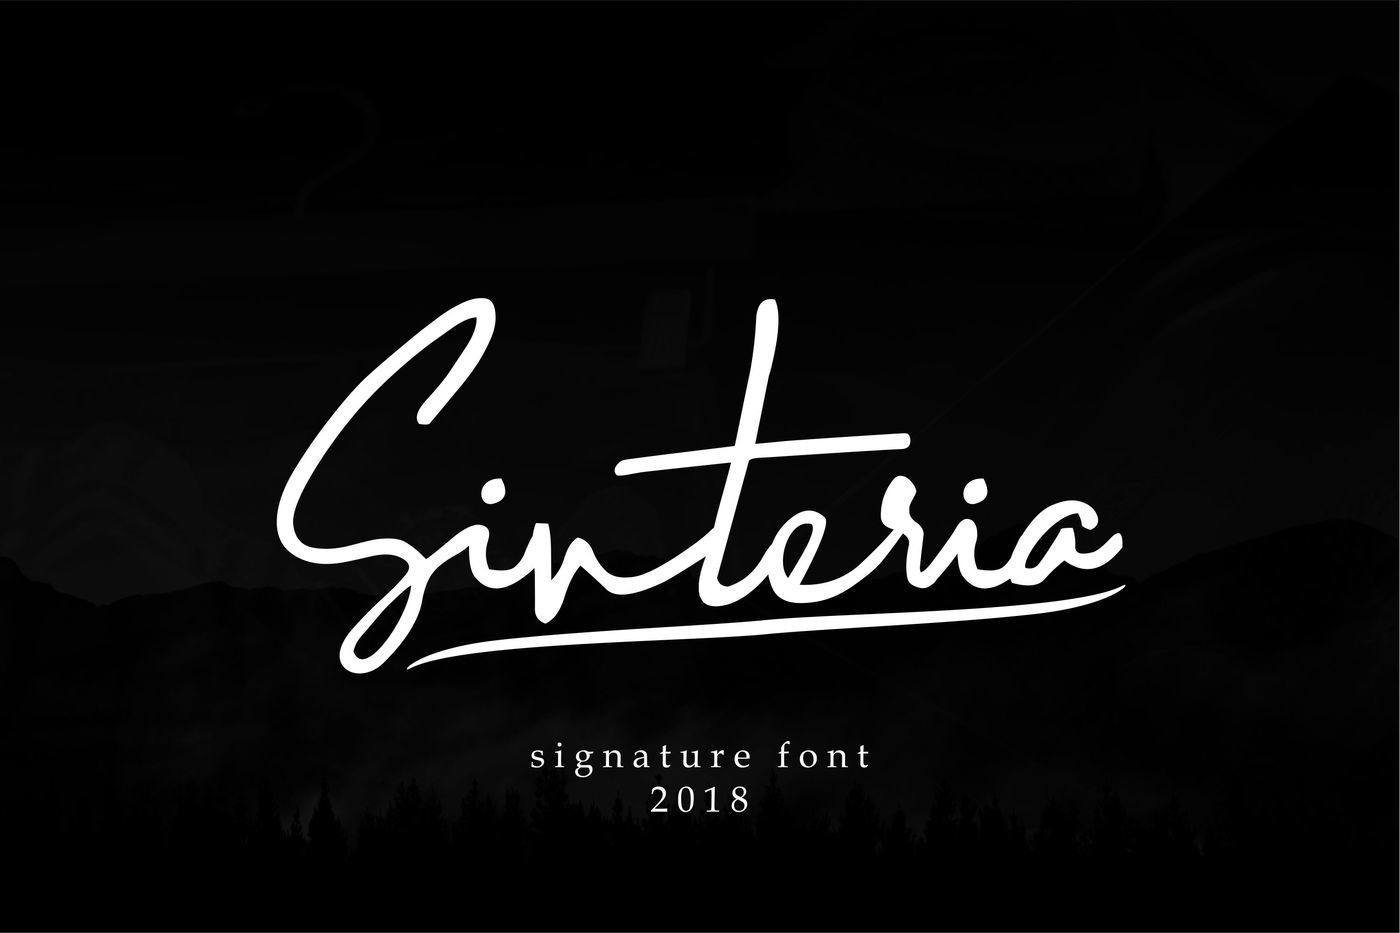 Sinteria Signature By Banyumili Studio Thehungryjpeg Com